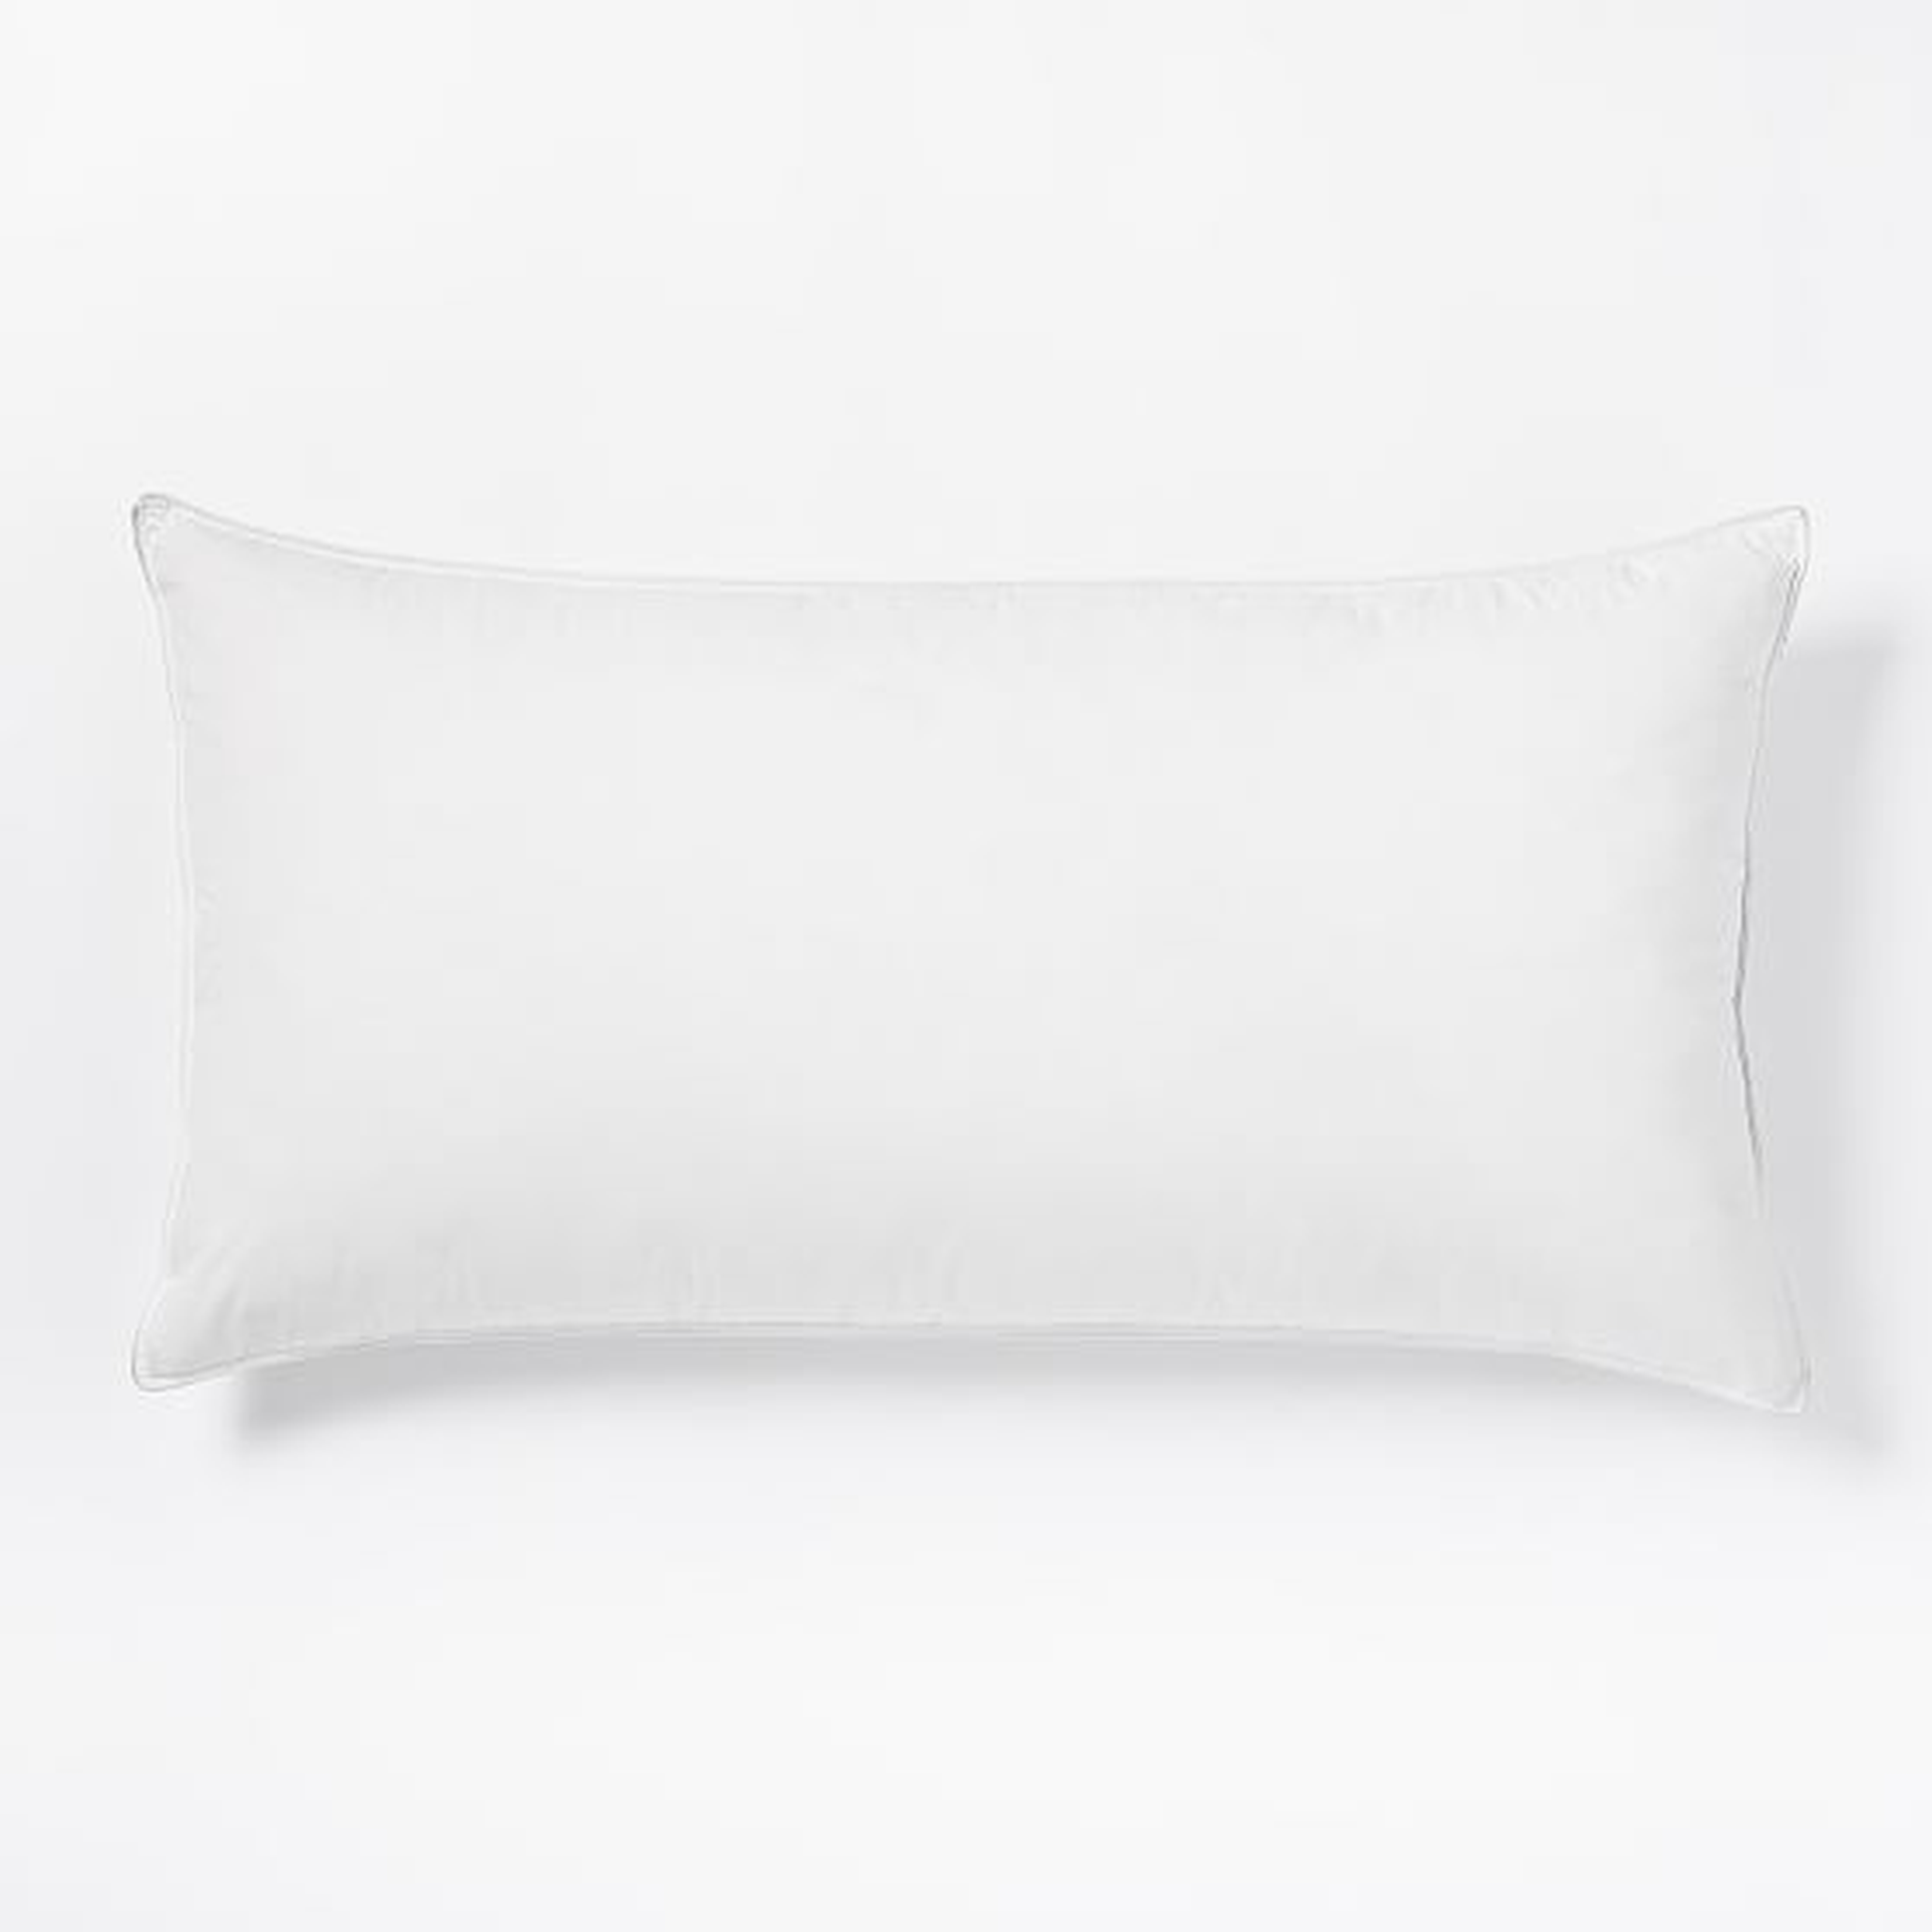 Botanical Down Alternative Pillow, King Side Sleeper, Set of 2 - West Elm